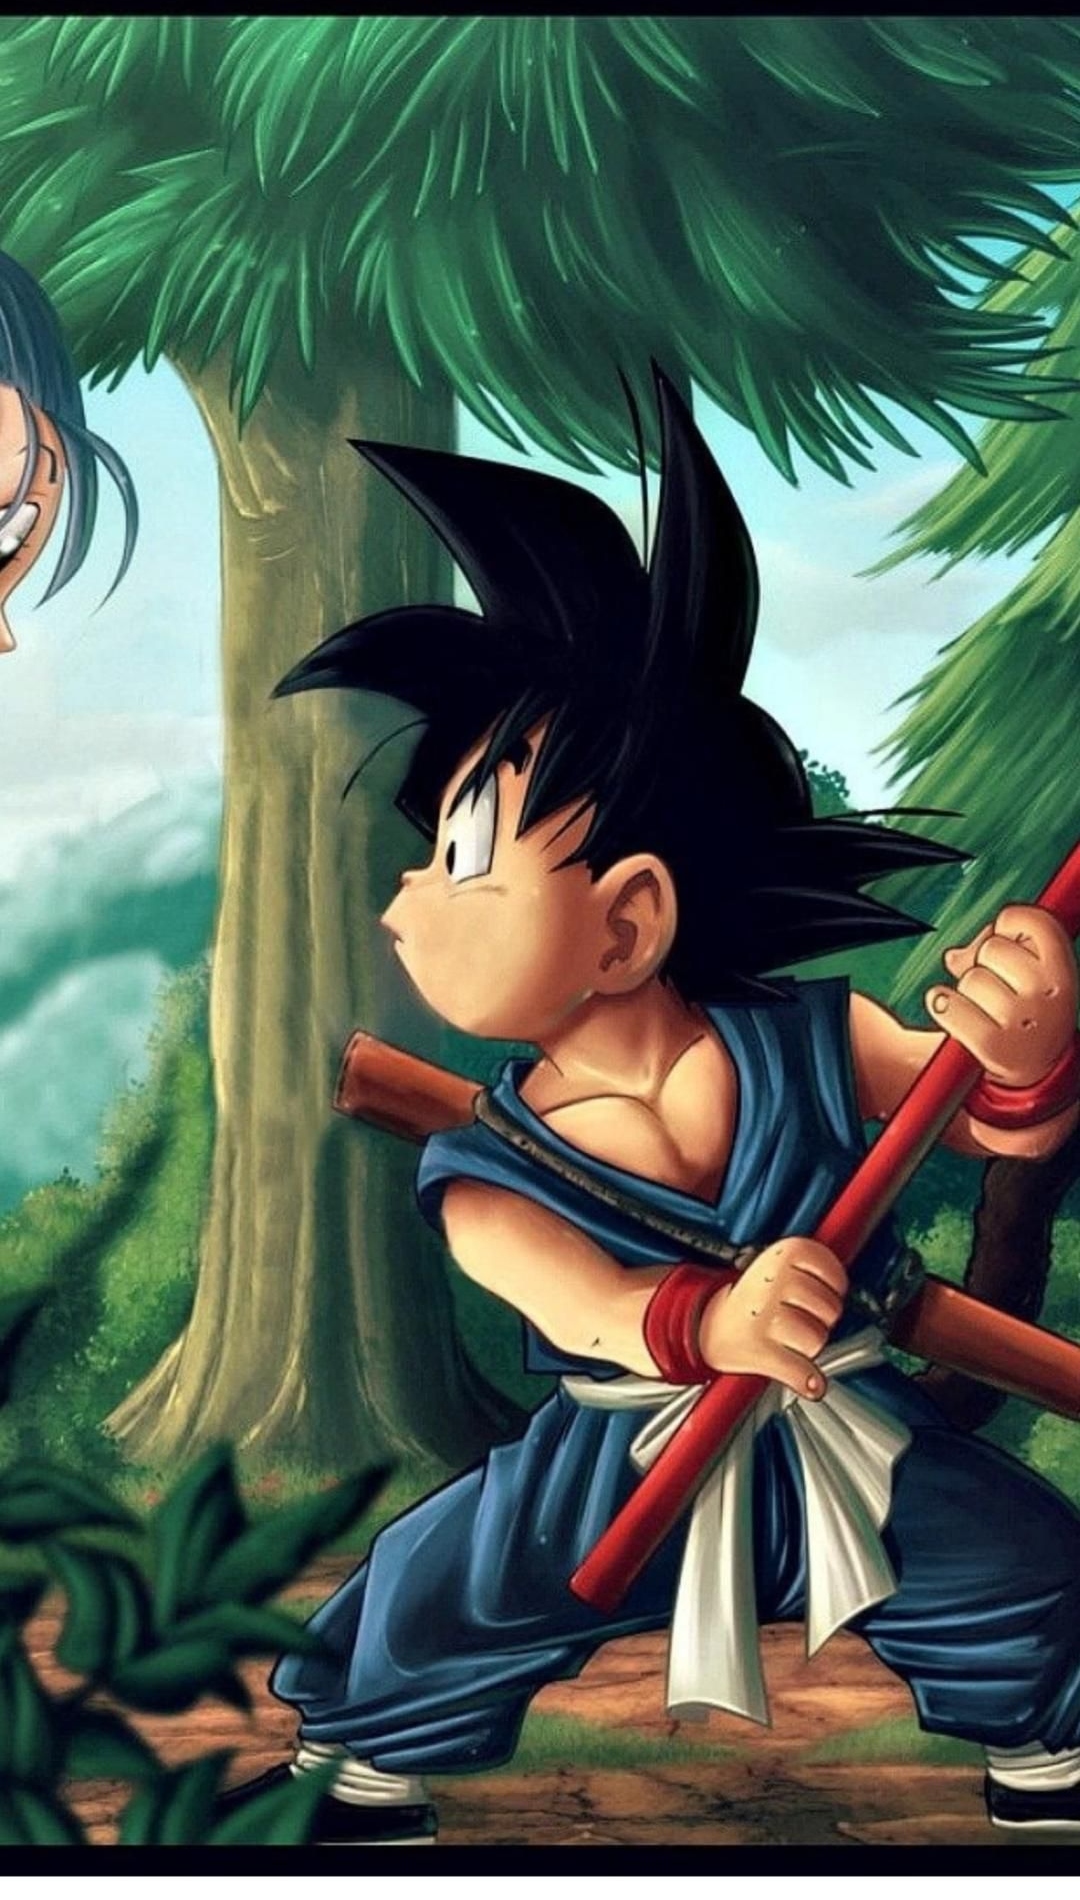 Son Goku Background